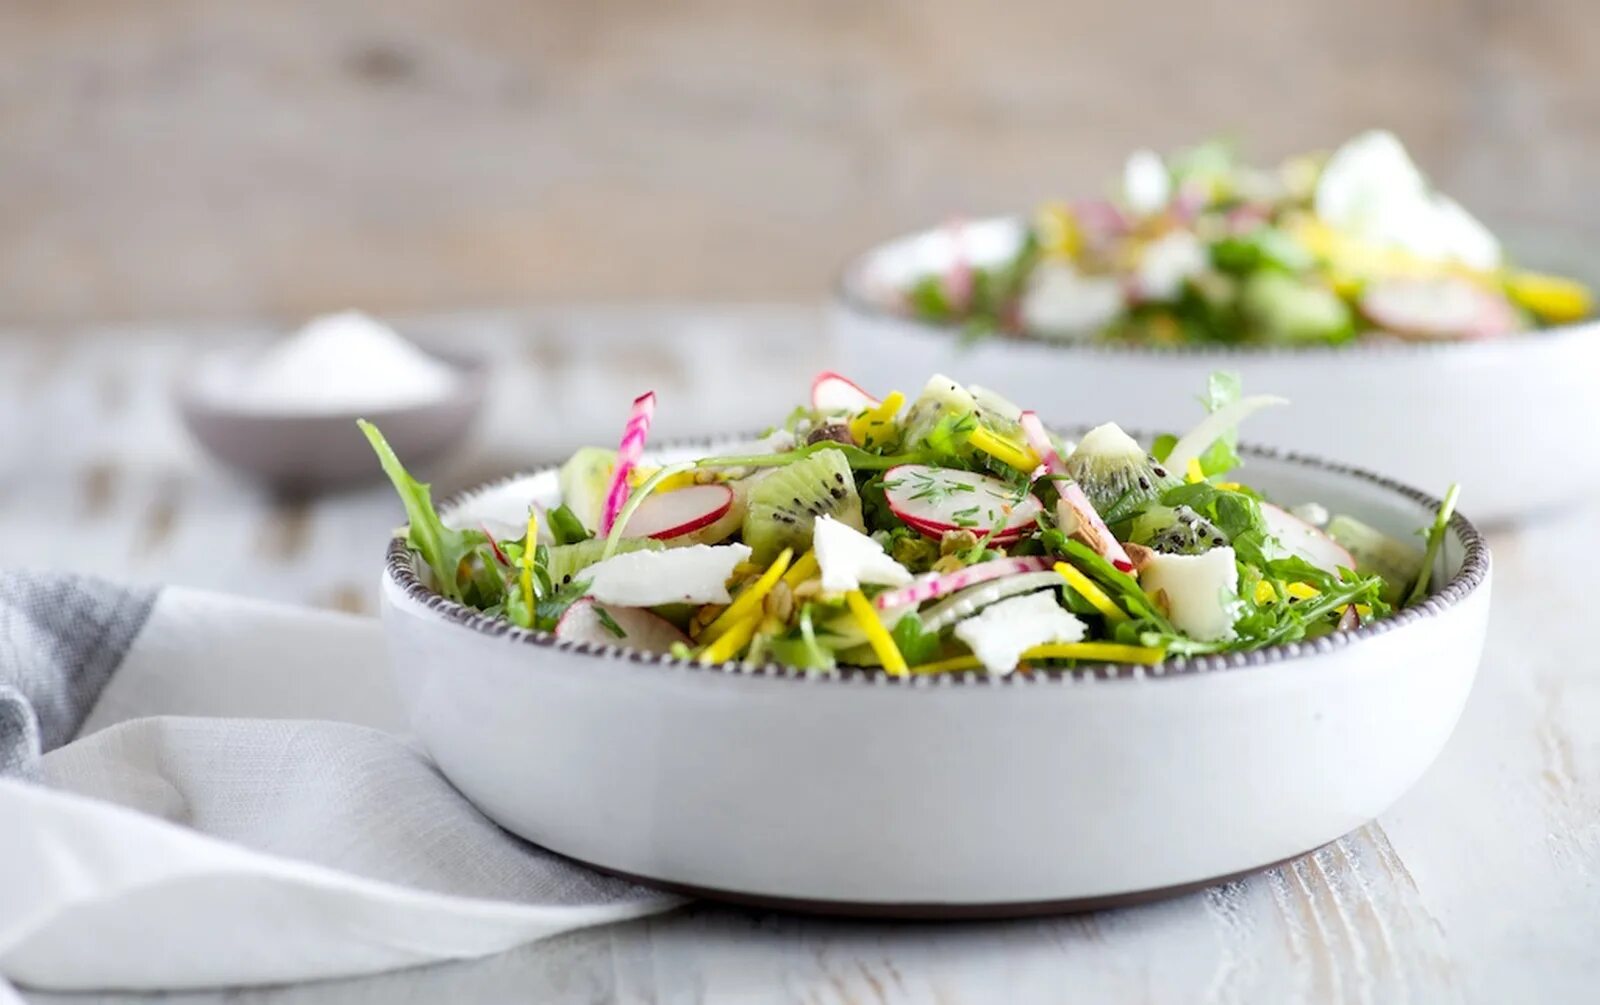 Fennel Salad. Салат руккола редис. Салат весенний. Салат из рукколы с редисом. Healthy salad